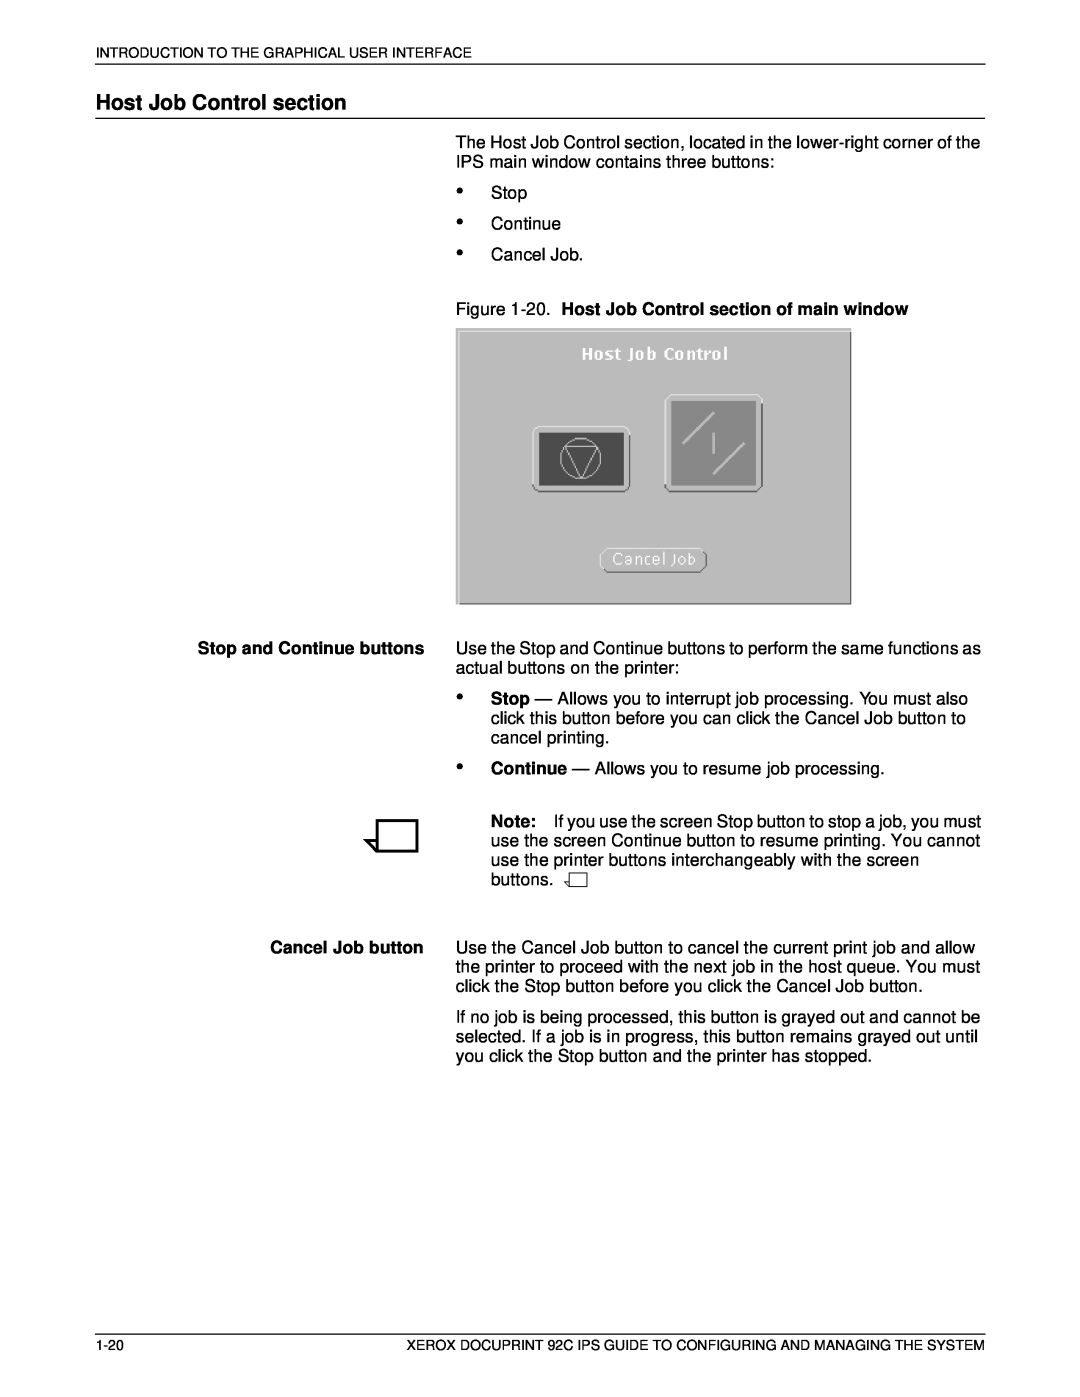 Xerox 92C IPS manual 20. Host Job Control section of main window 